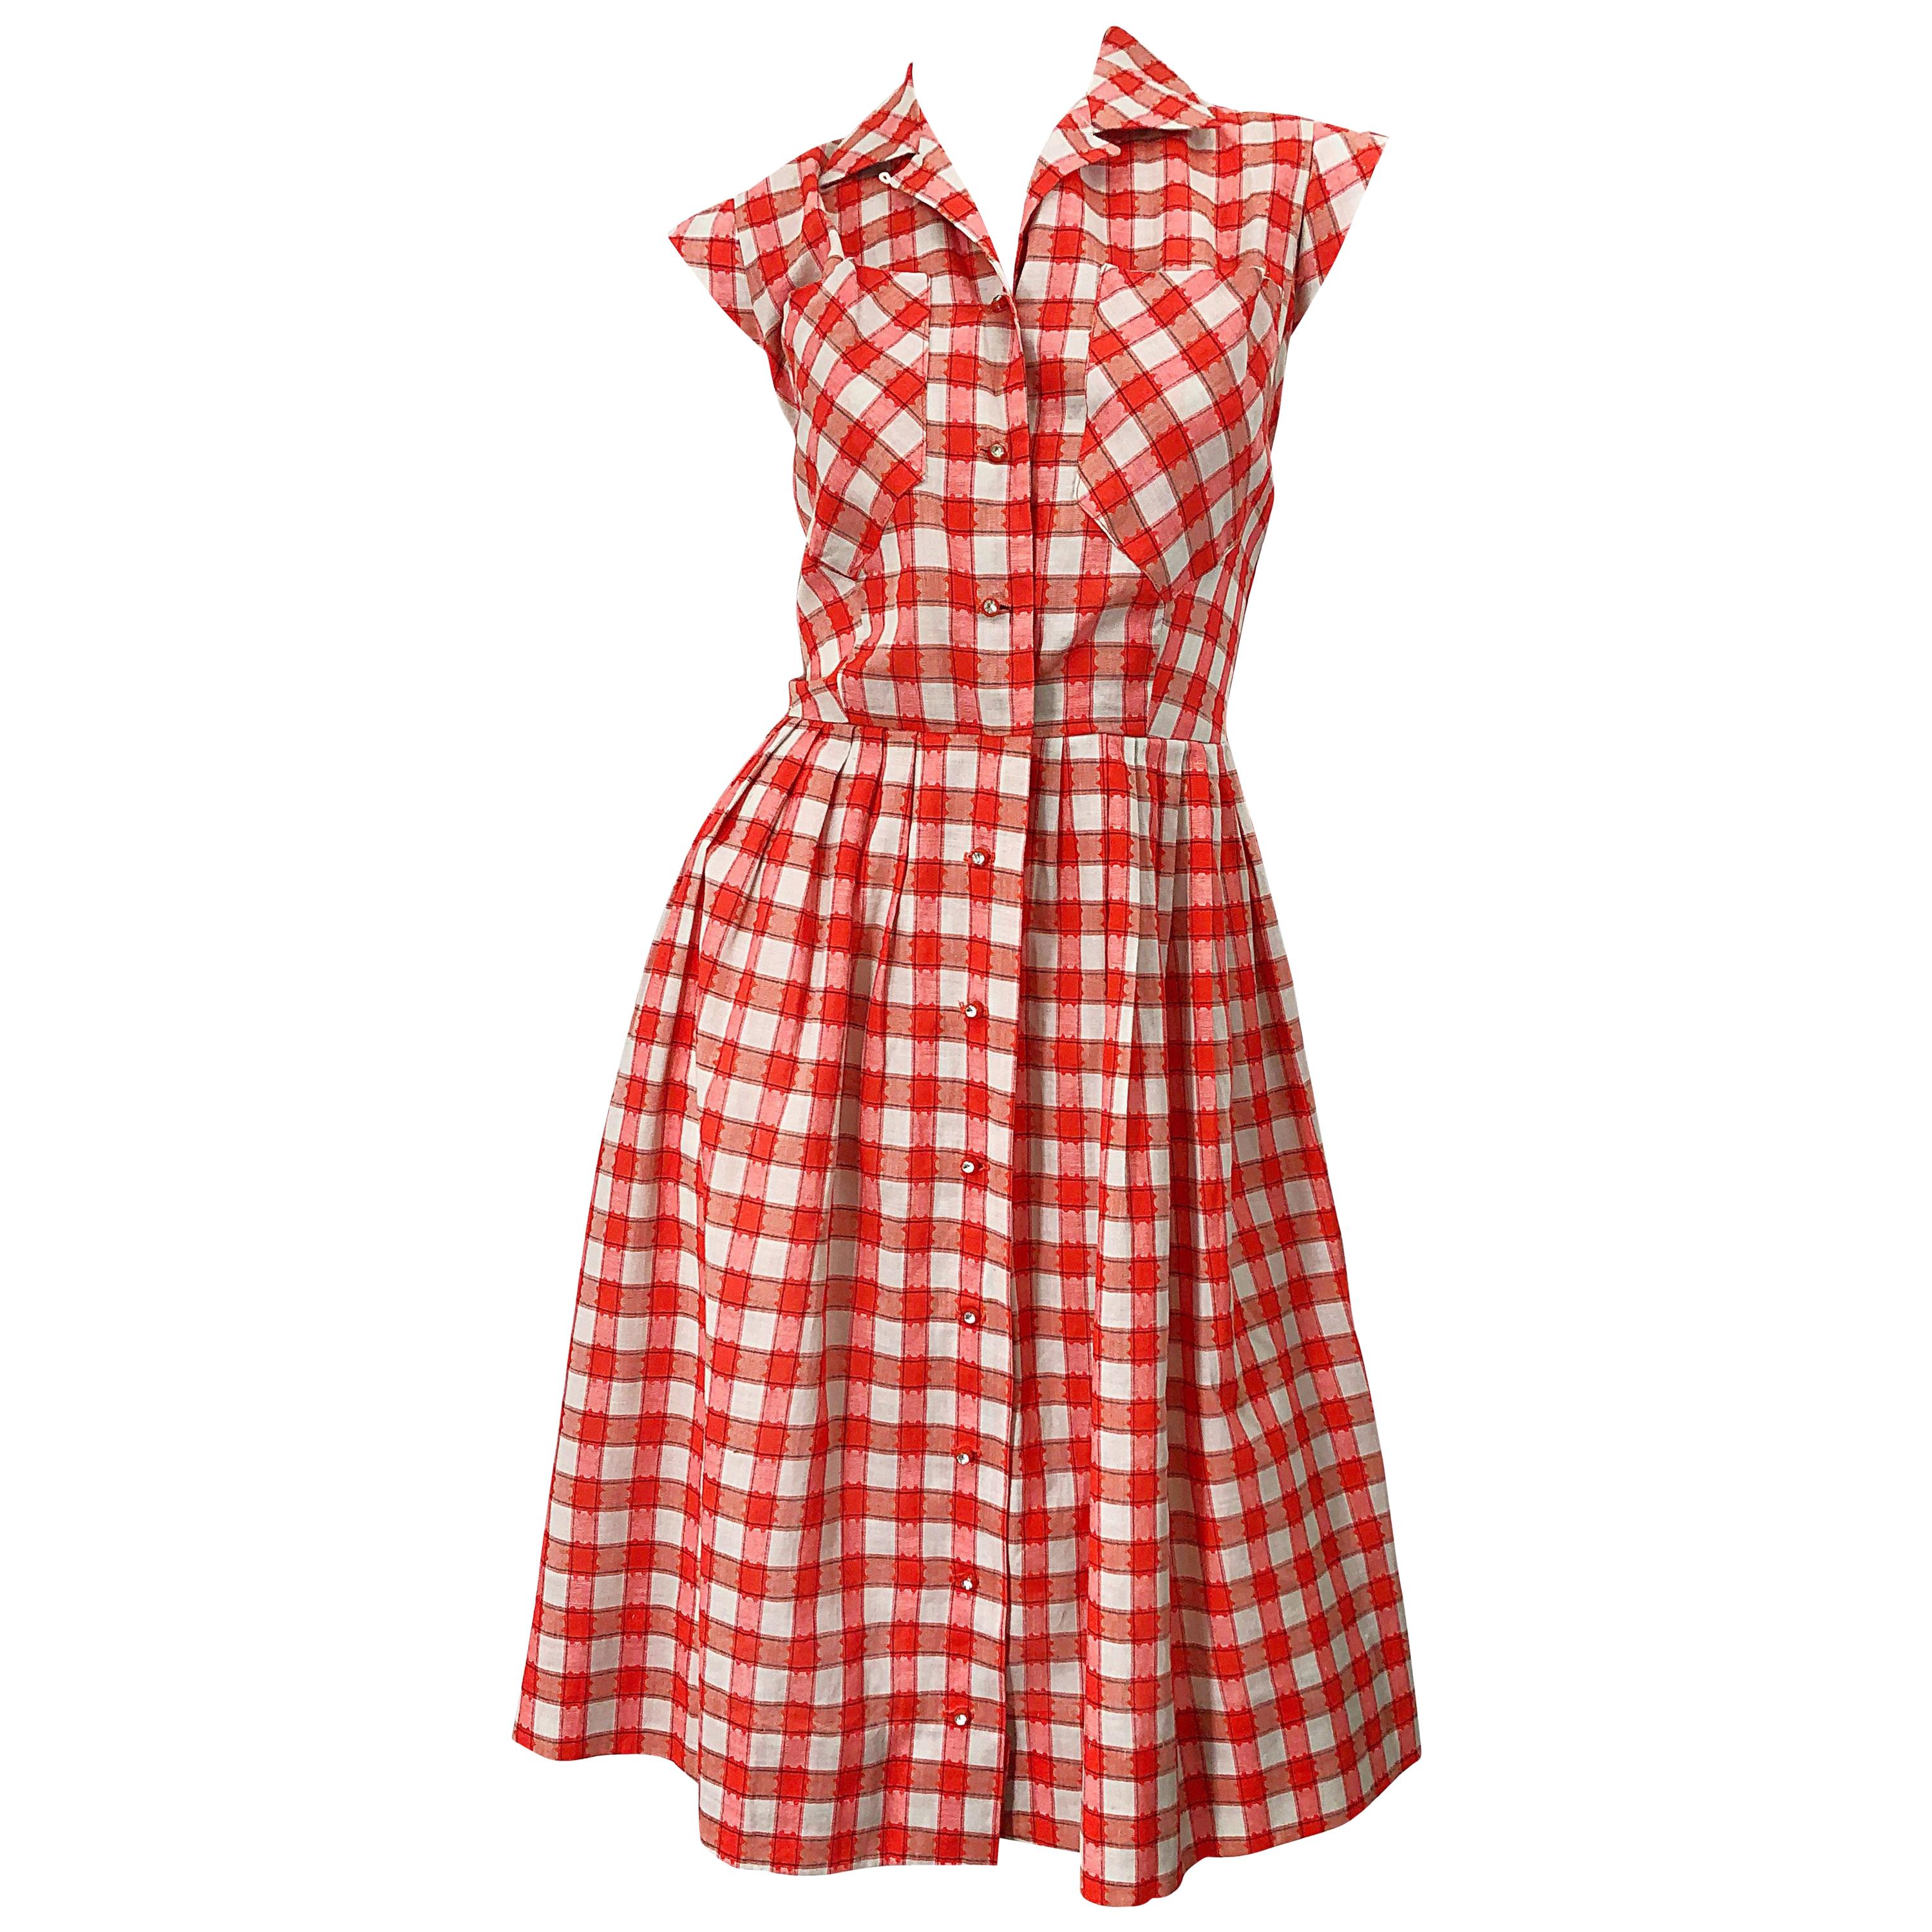 Rare 1950s Ann Taylor Red + White Checkered Rhinestone Vintage 50s Cotton Dress